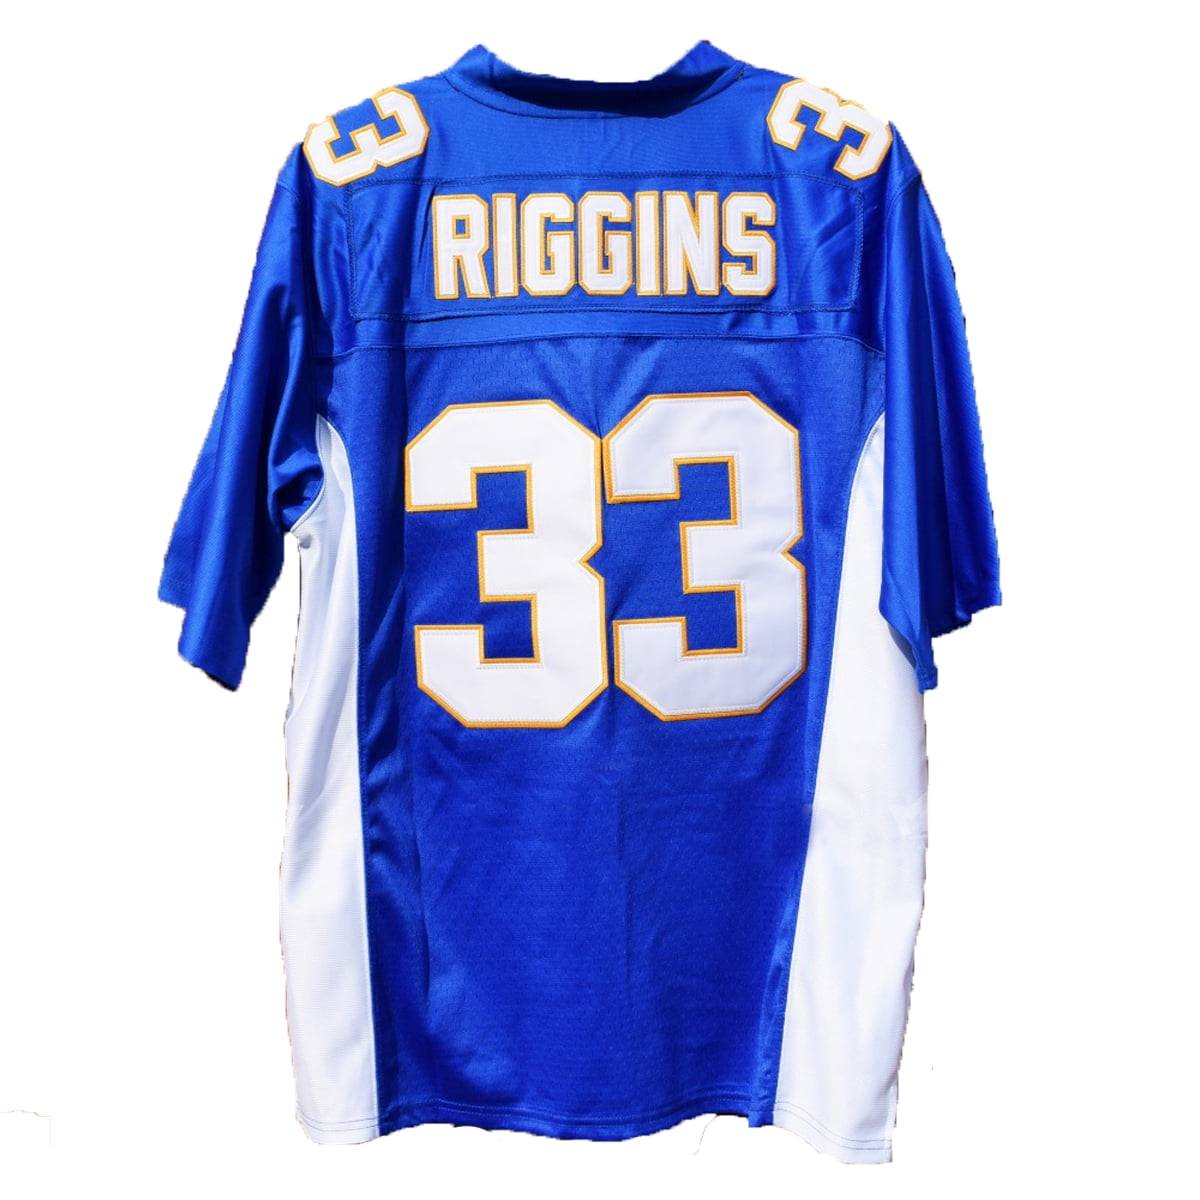 Tim Riggins #33 Dillon Panthers Football Jersey Friday Night Lights TV Uniform 